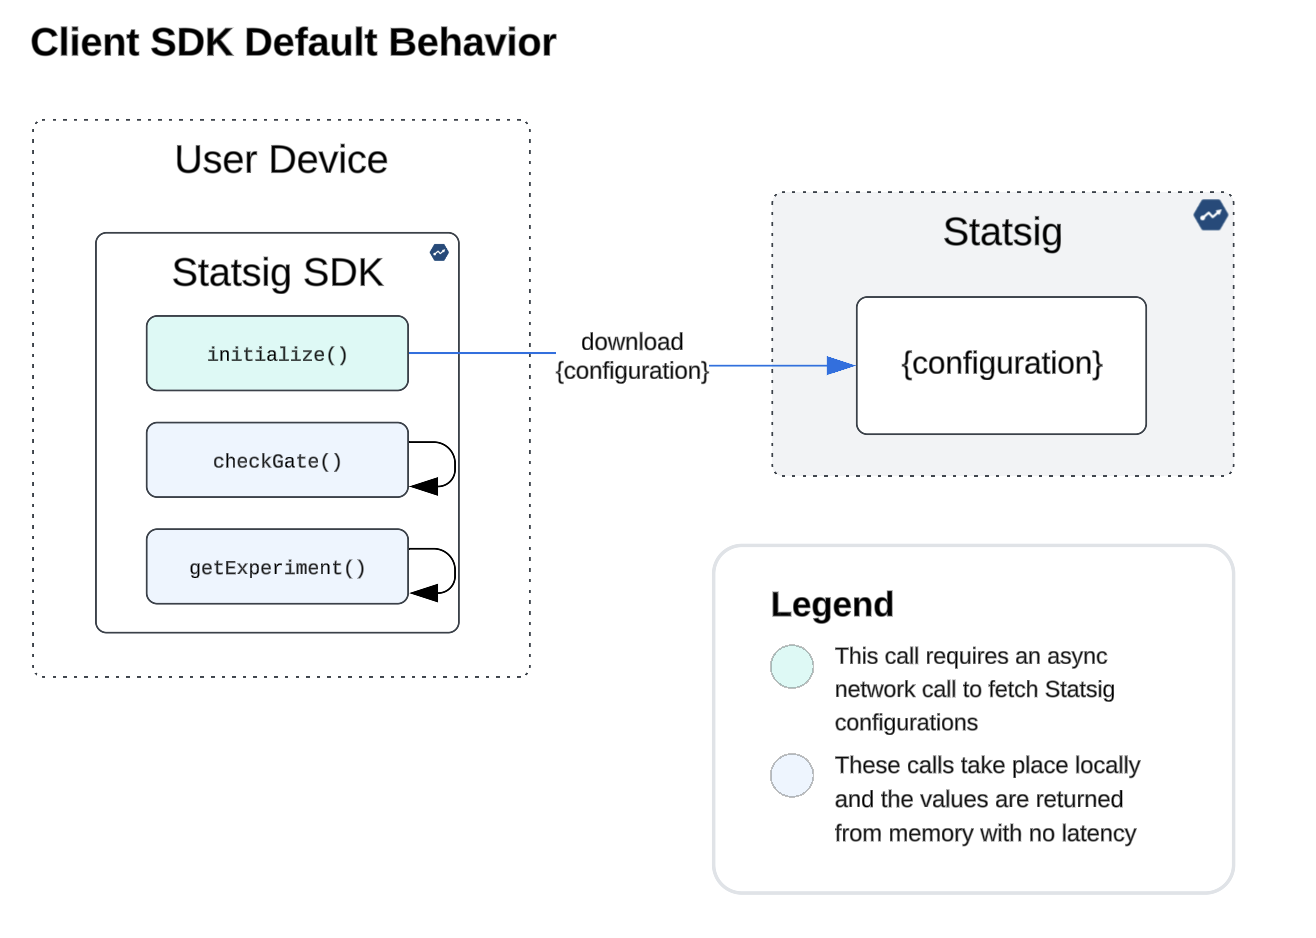 client SDK default behavior